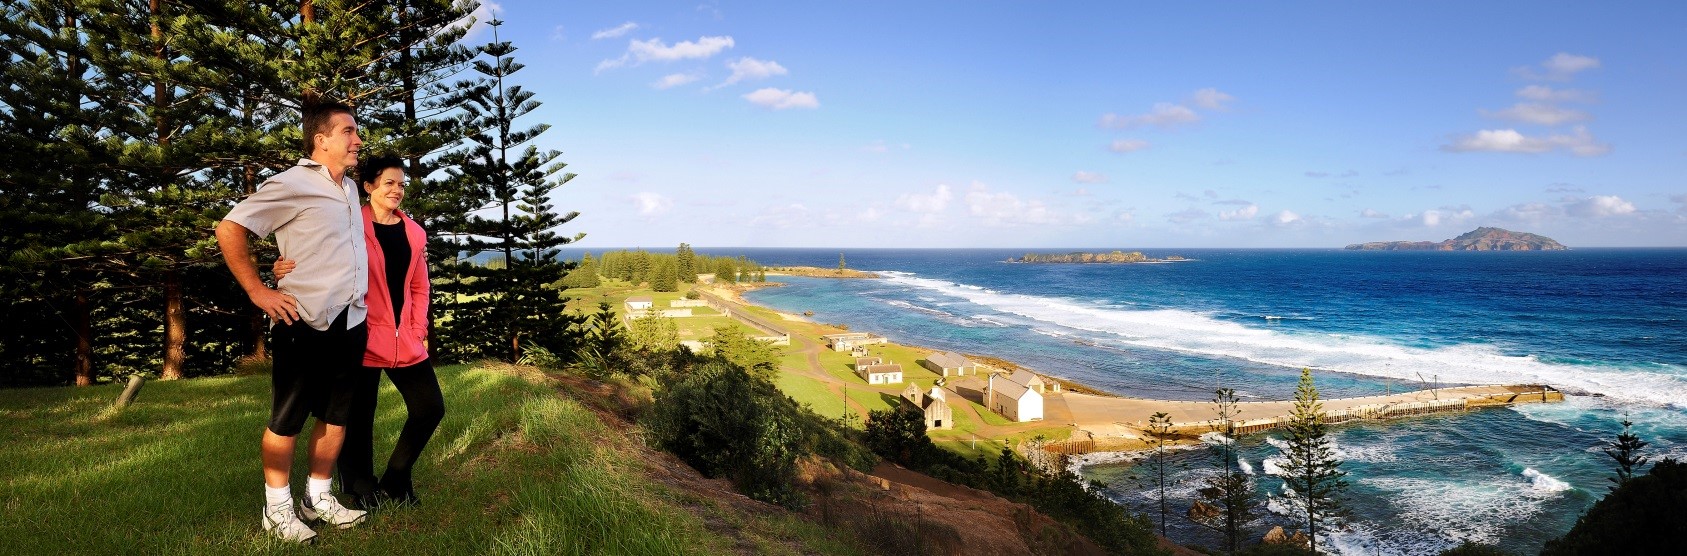 Norfolk Island views